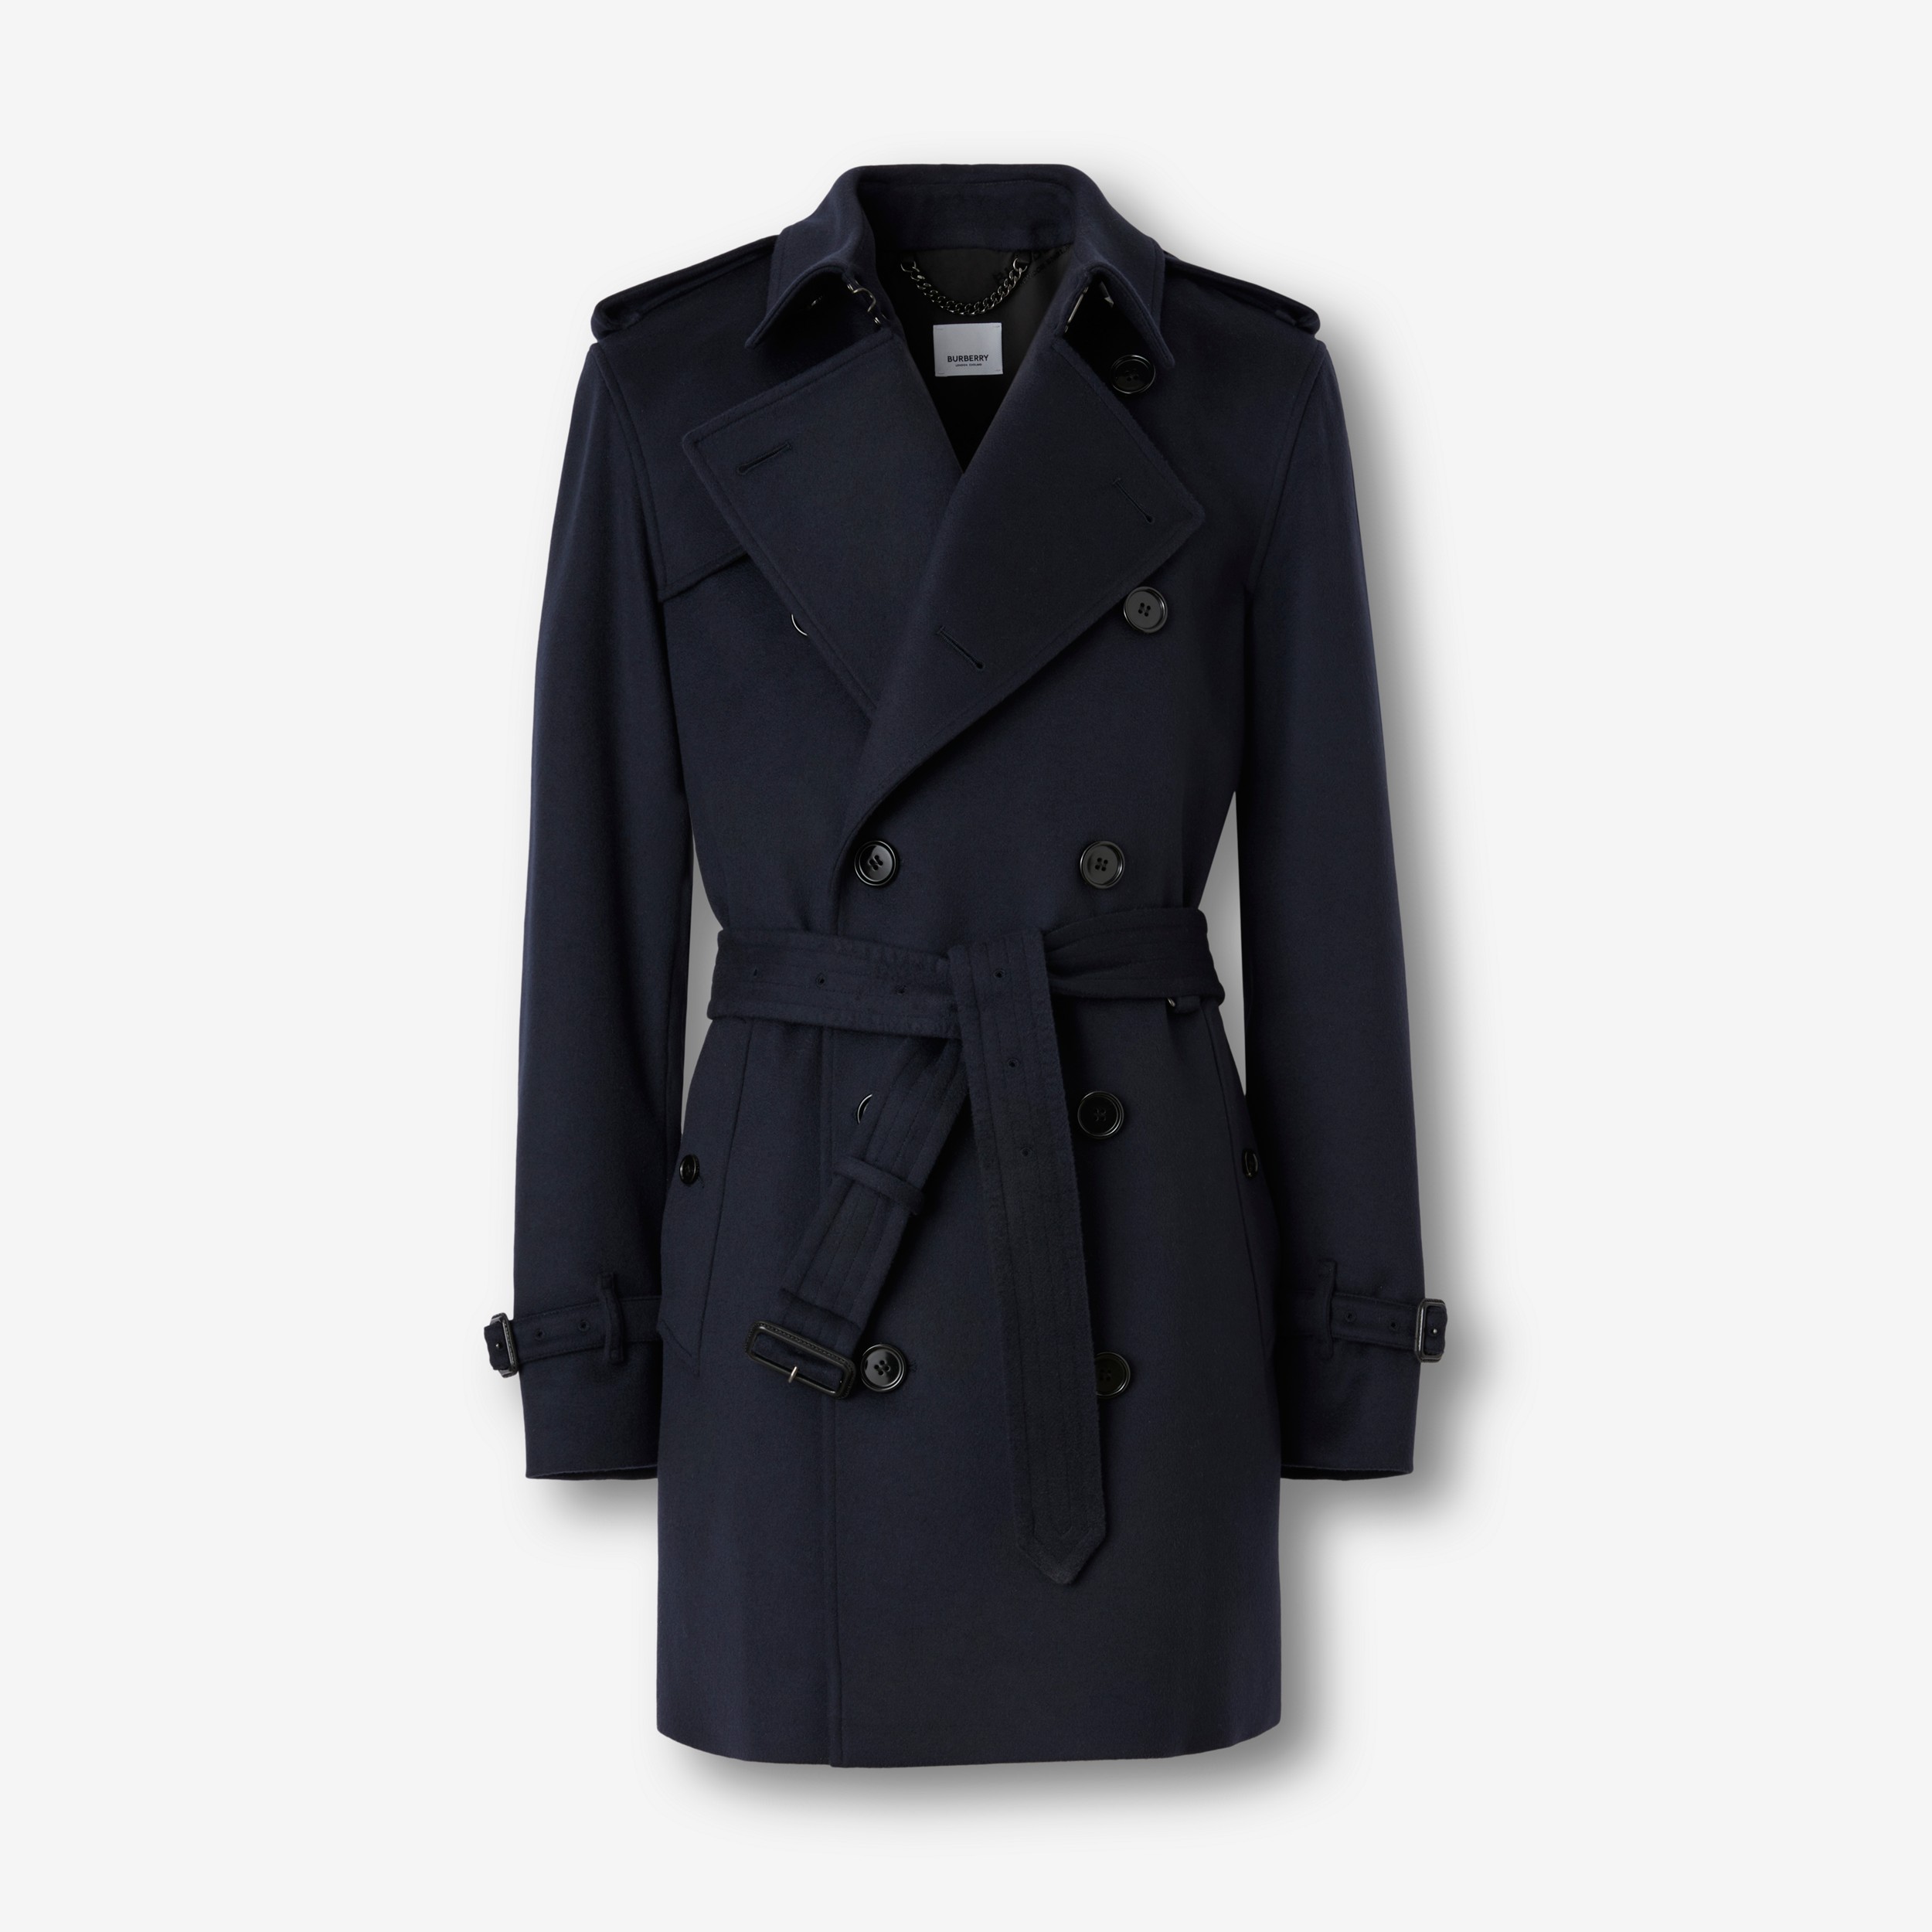 Trench coat Wimbledon in lana e cashmere (Navy Notte) - Uomo | Sito ufficiale Burberry® - 1